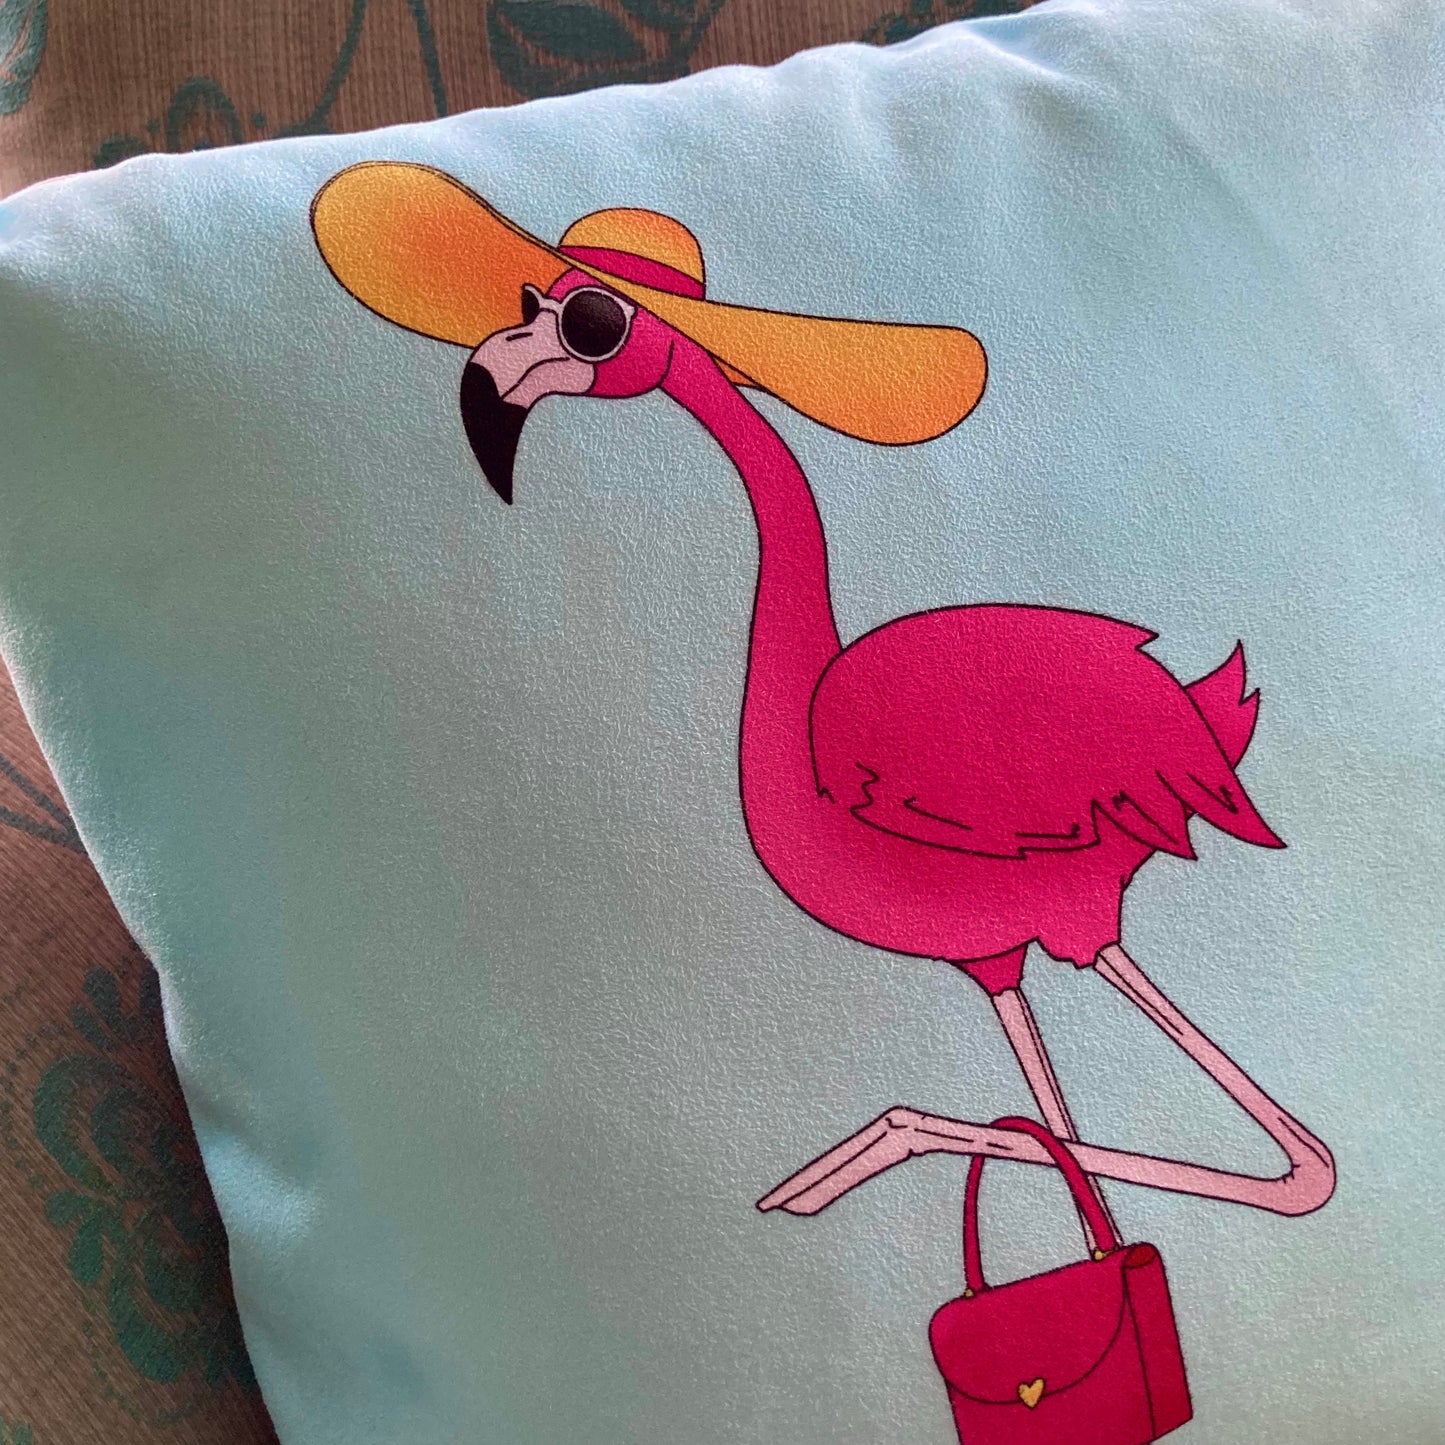 Ms Flo Mingo Flamingo Cushion